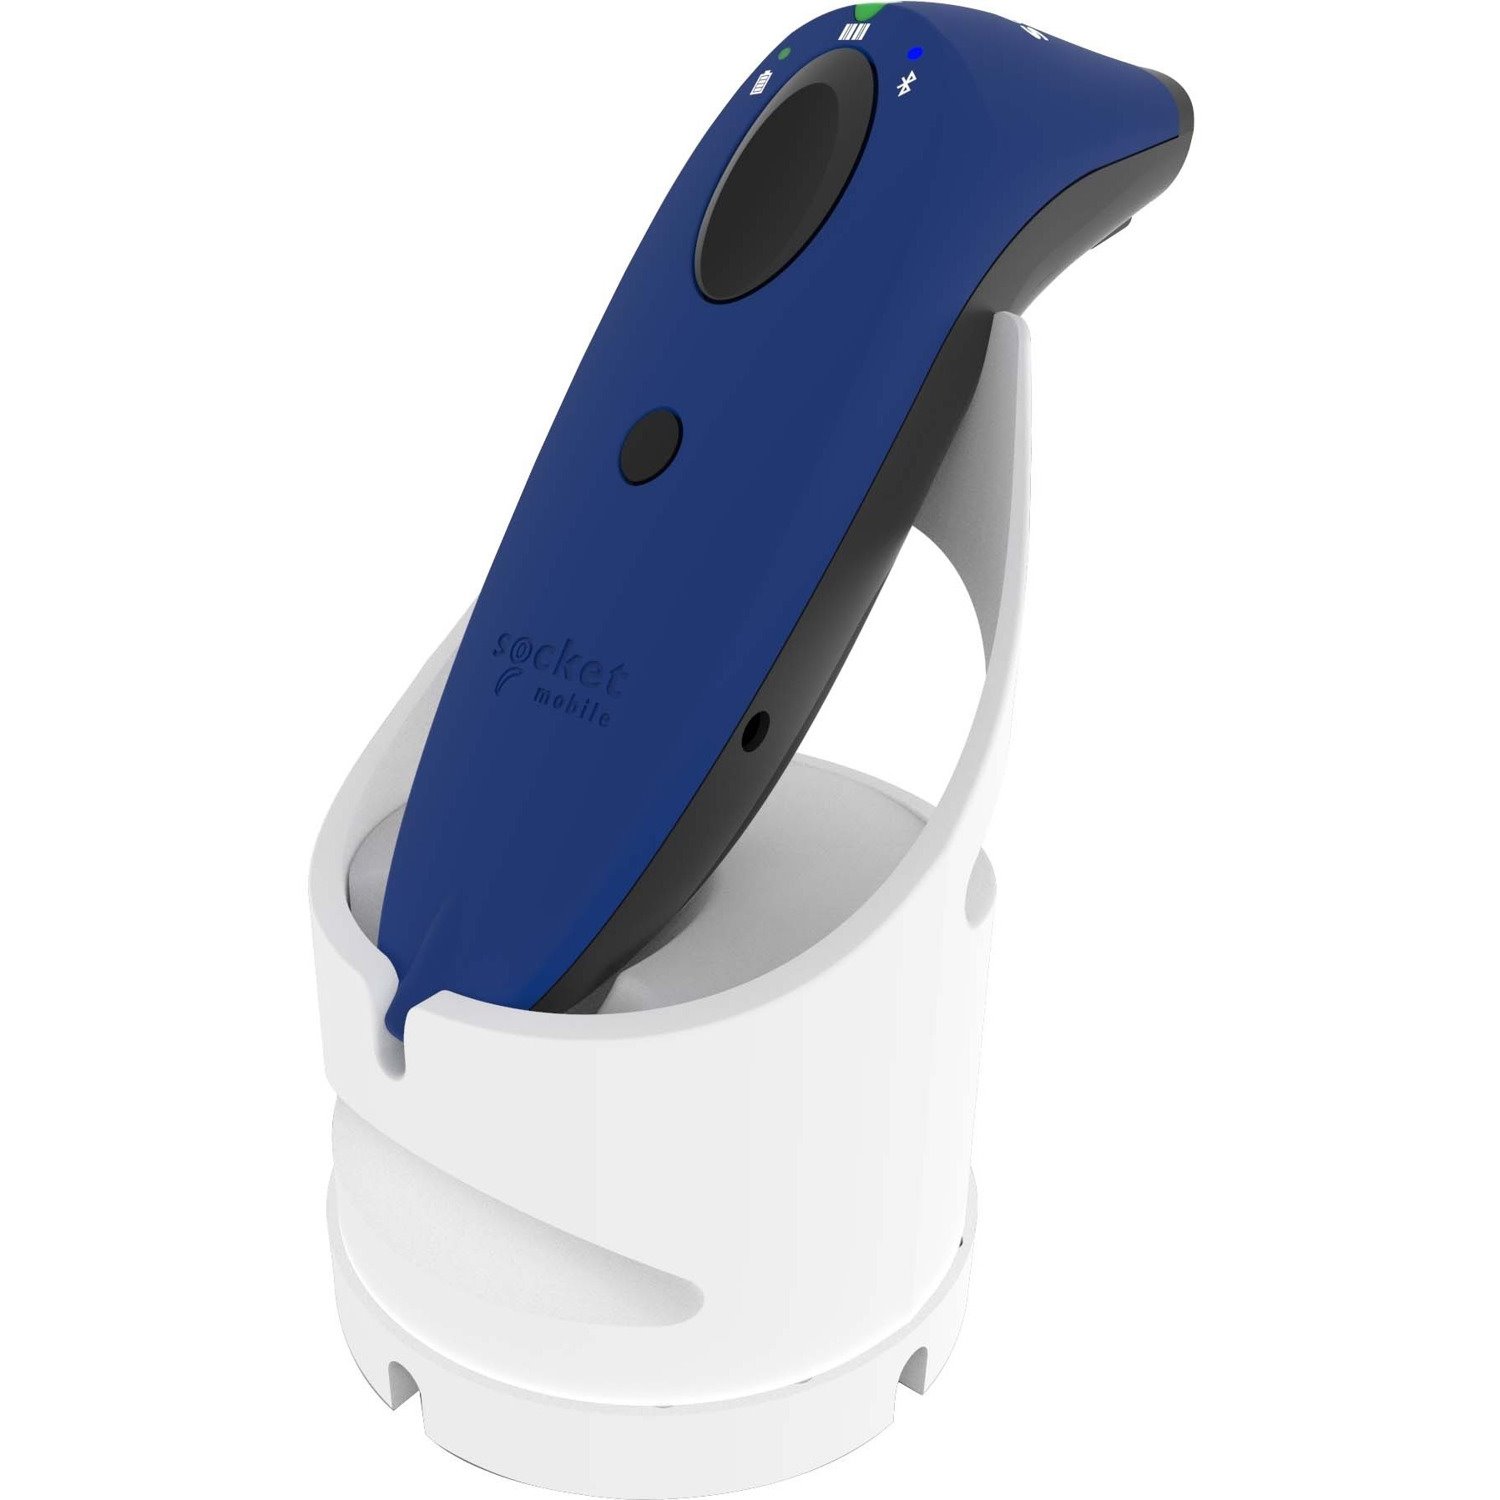 Socket Mobile SocketScan S740 Handheld Barcode Scanner - Wireless Connectivity - Blue, White